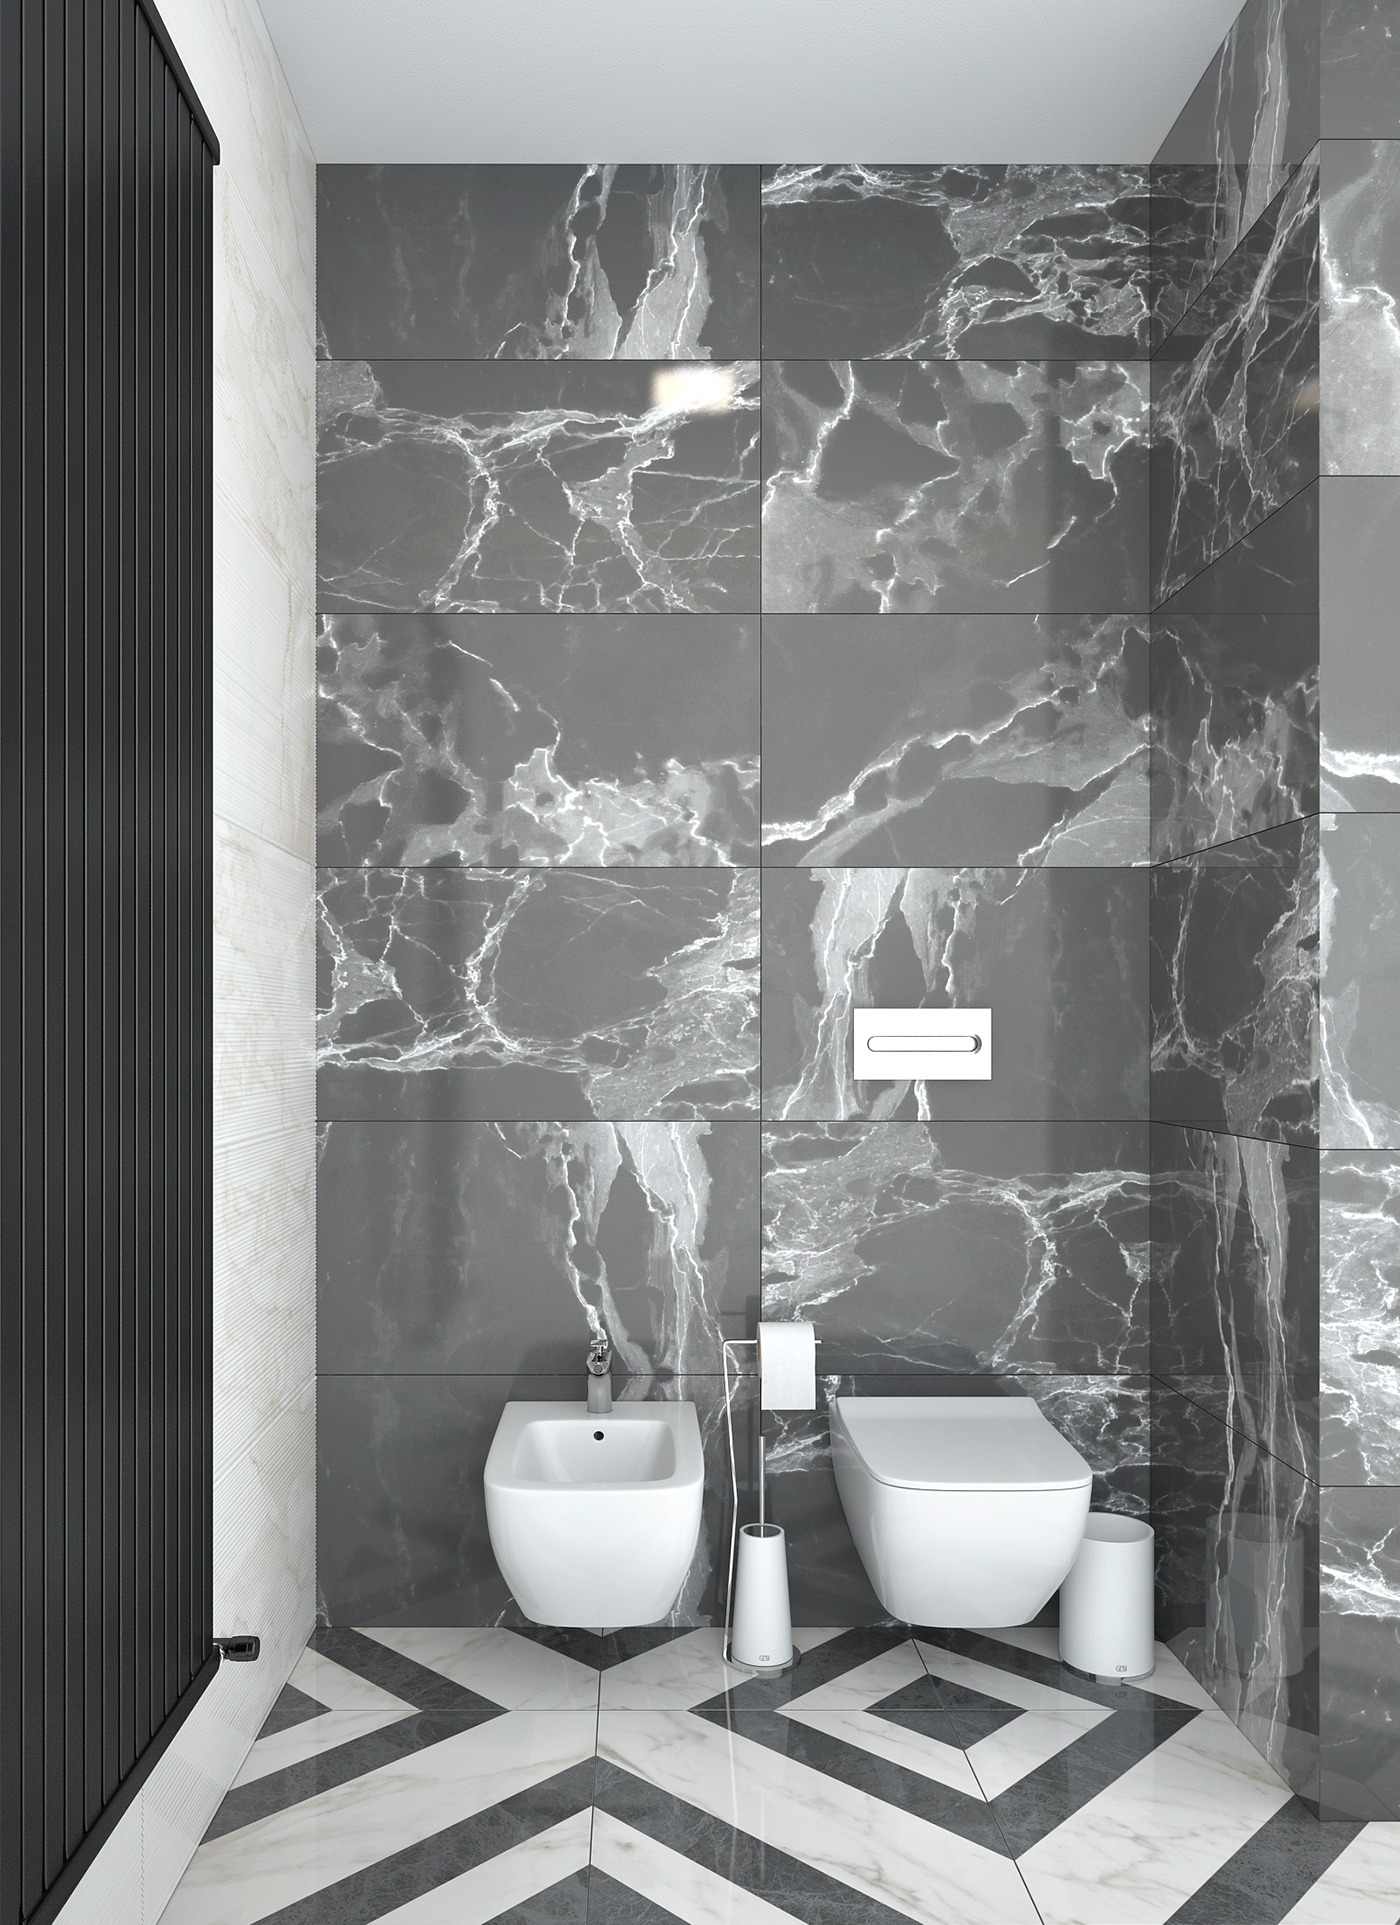 design architecture rendering minimalist bathroom Дизайн архитектура визуализация минимализм ванная санузел